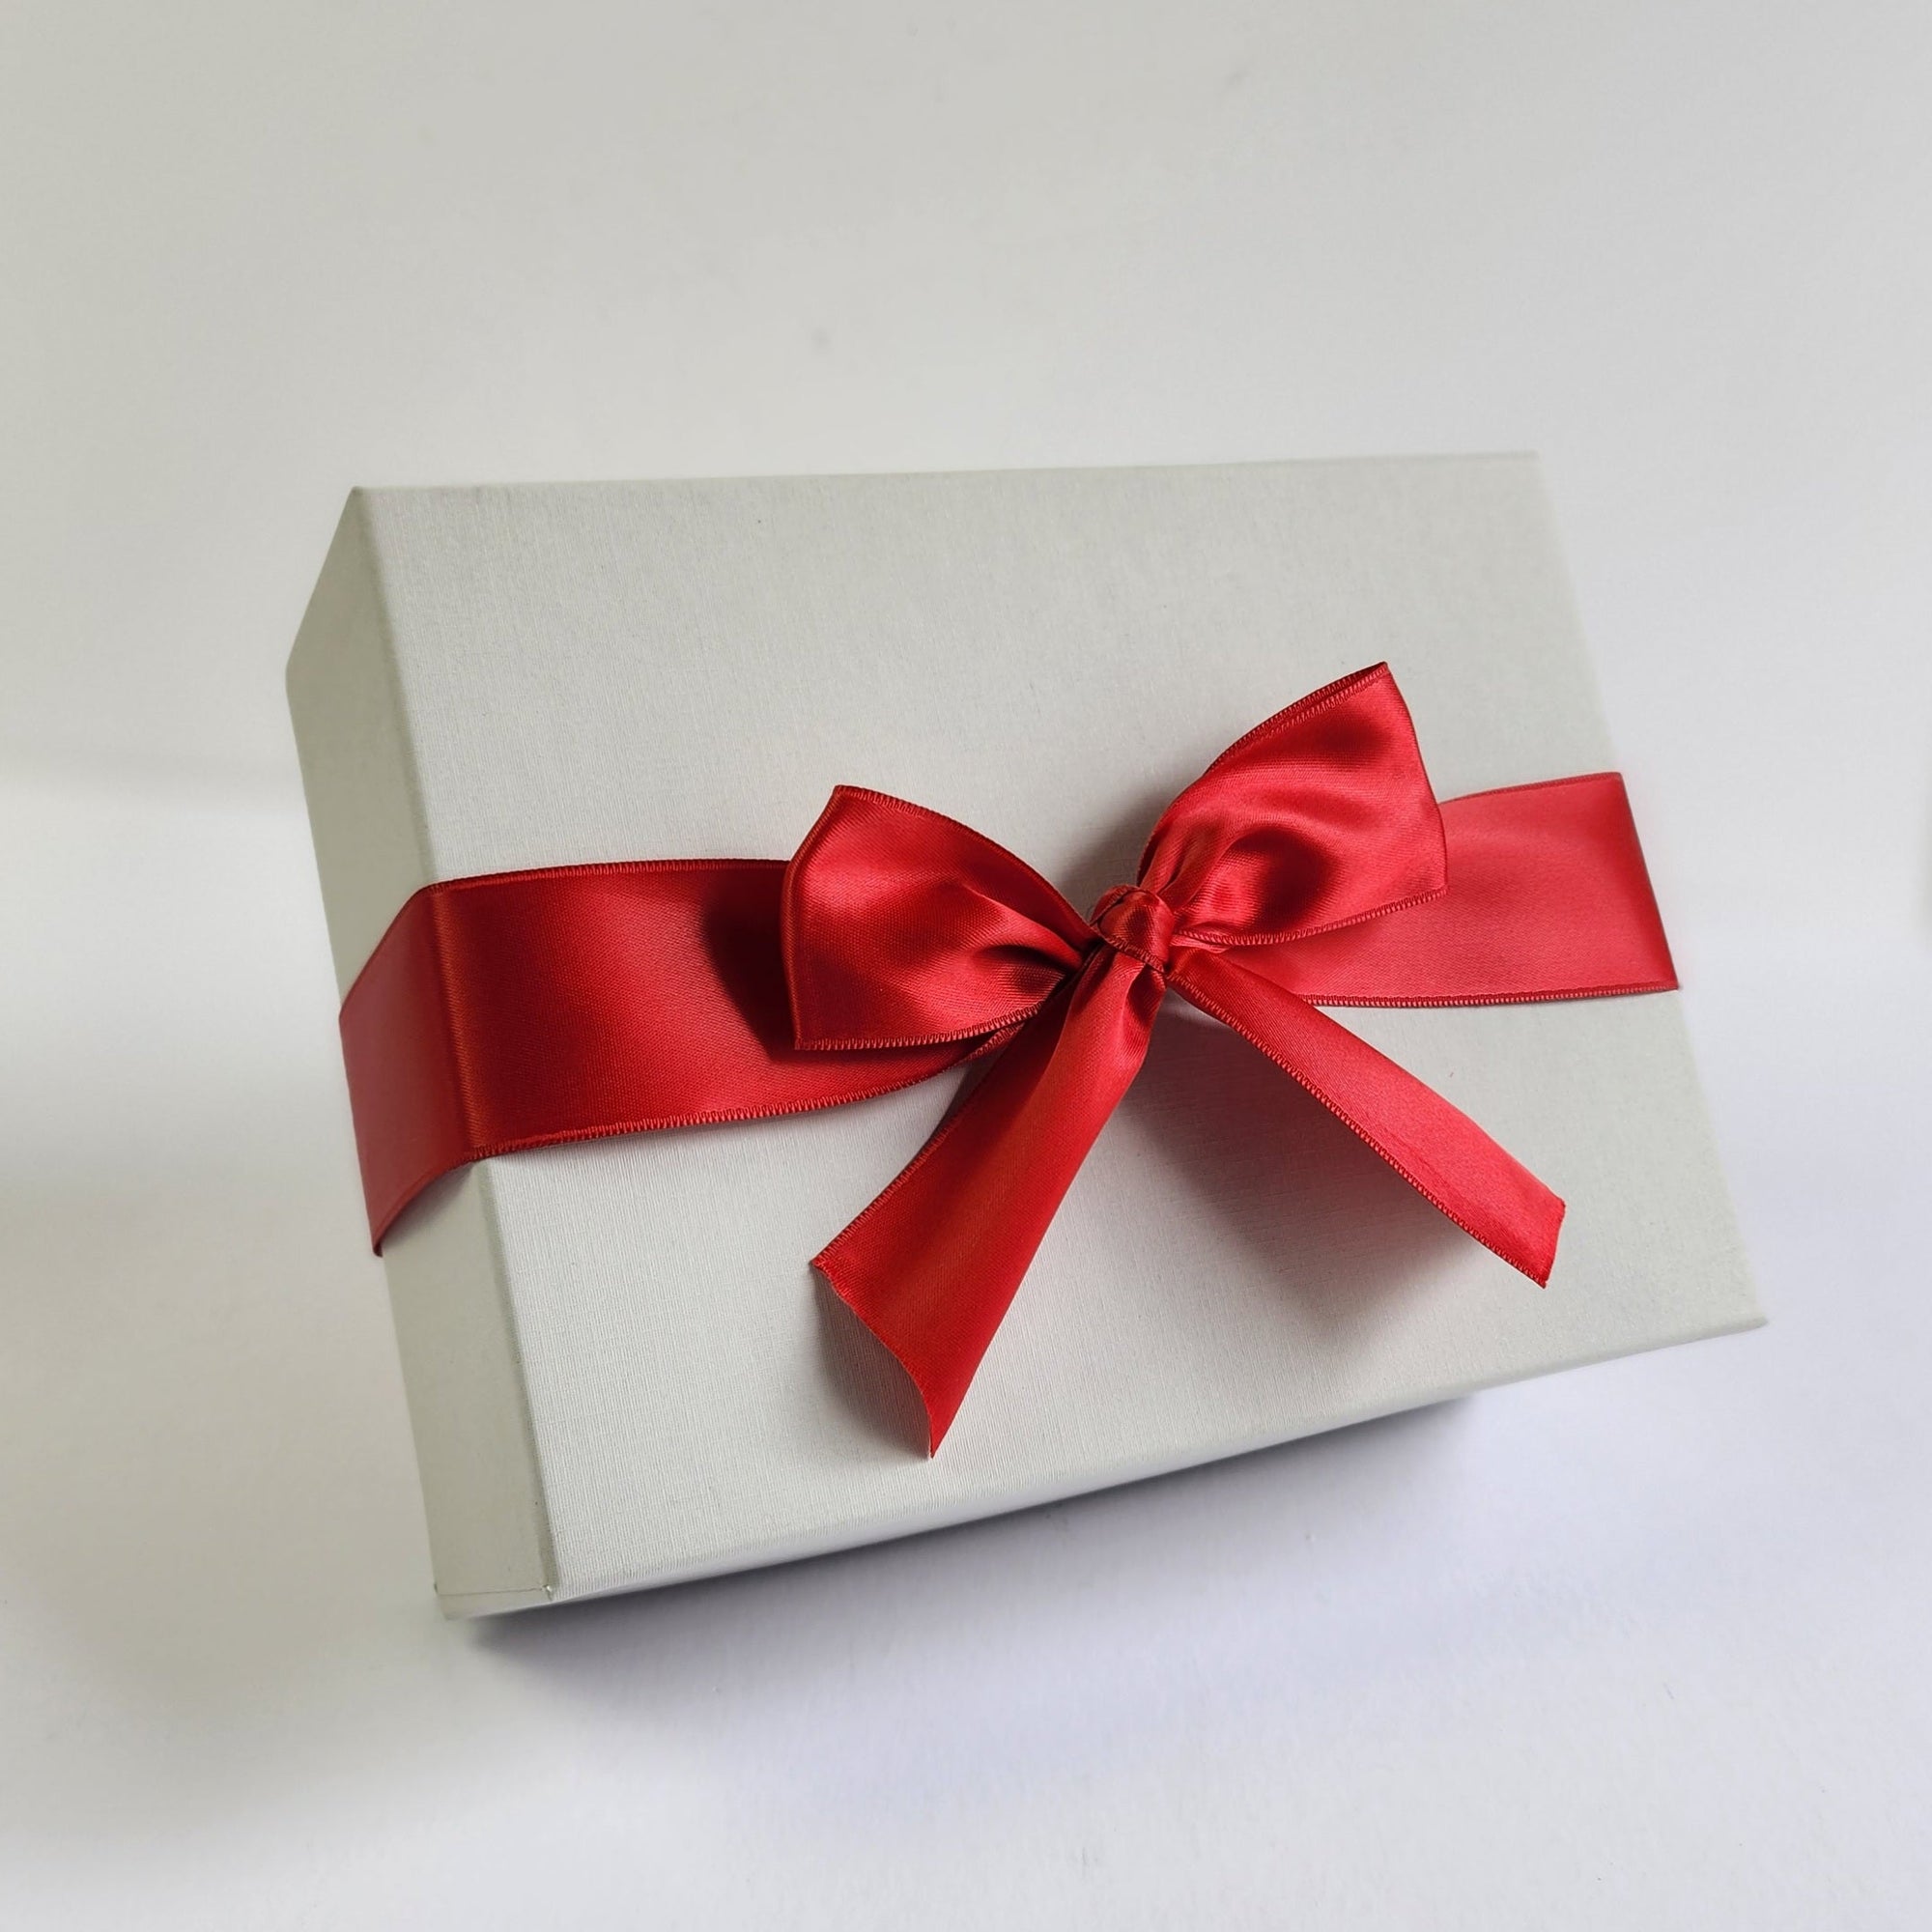 REACHDESK - Holiday Cheer Gift Box